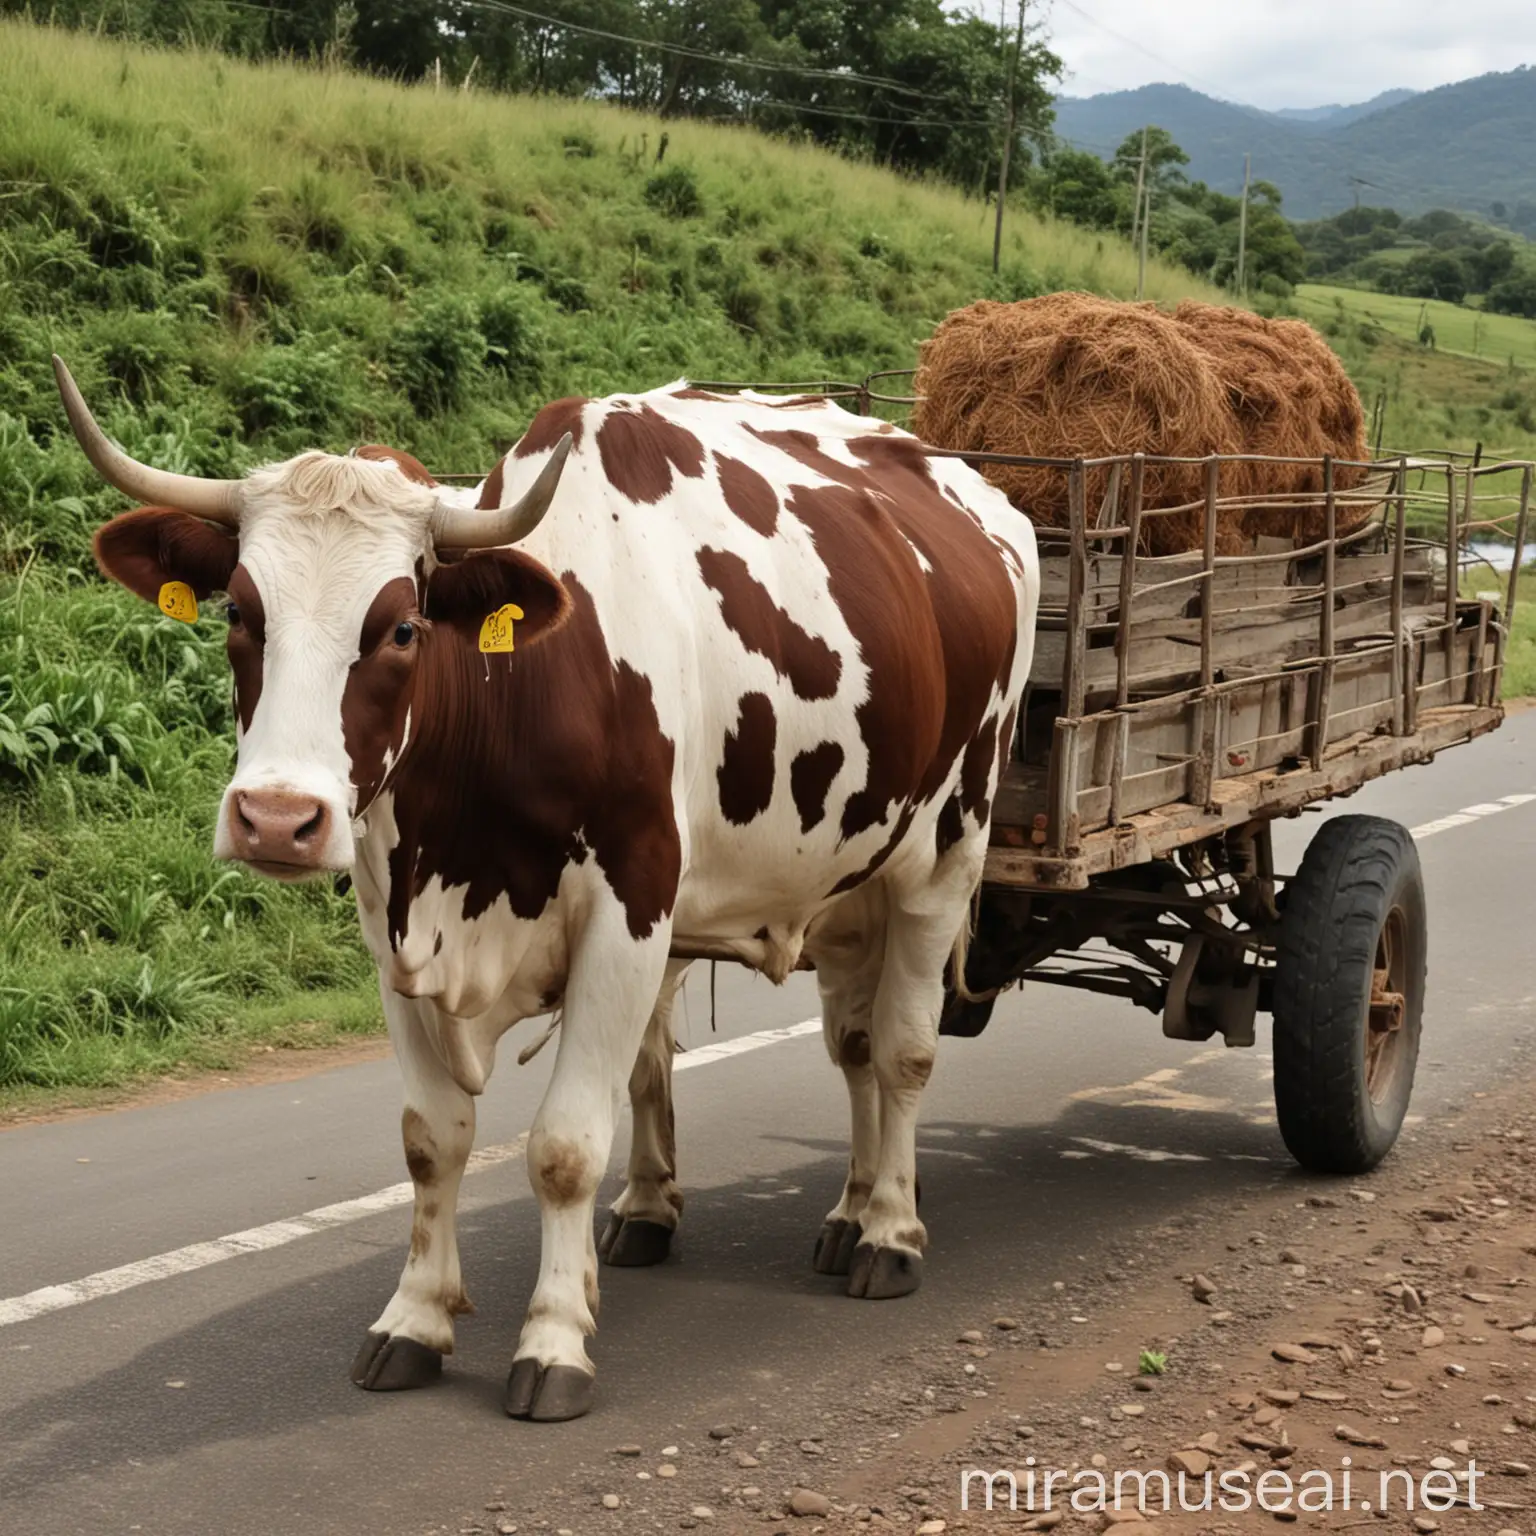 Cow Pulling Cart in Rural Landscape